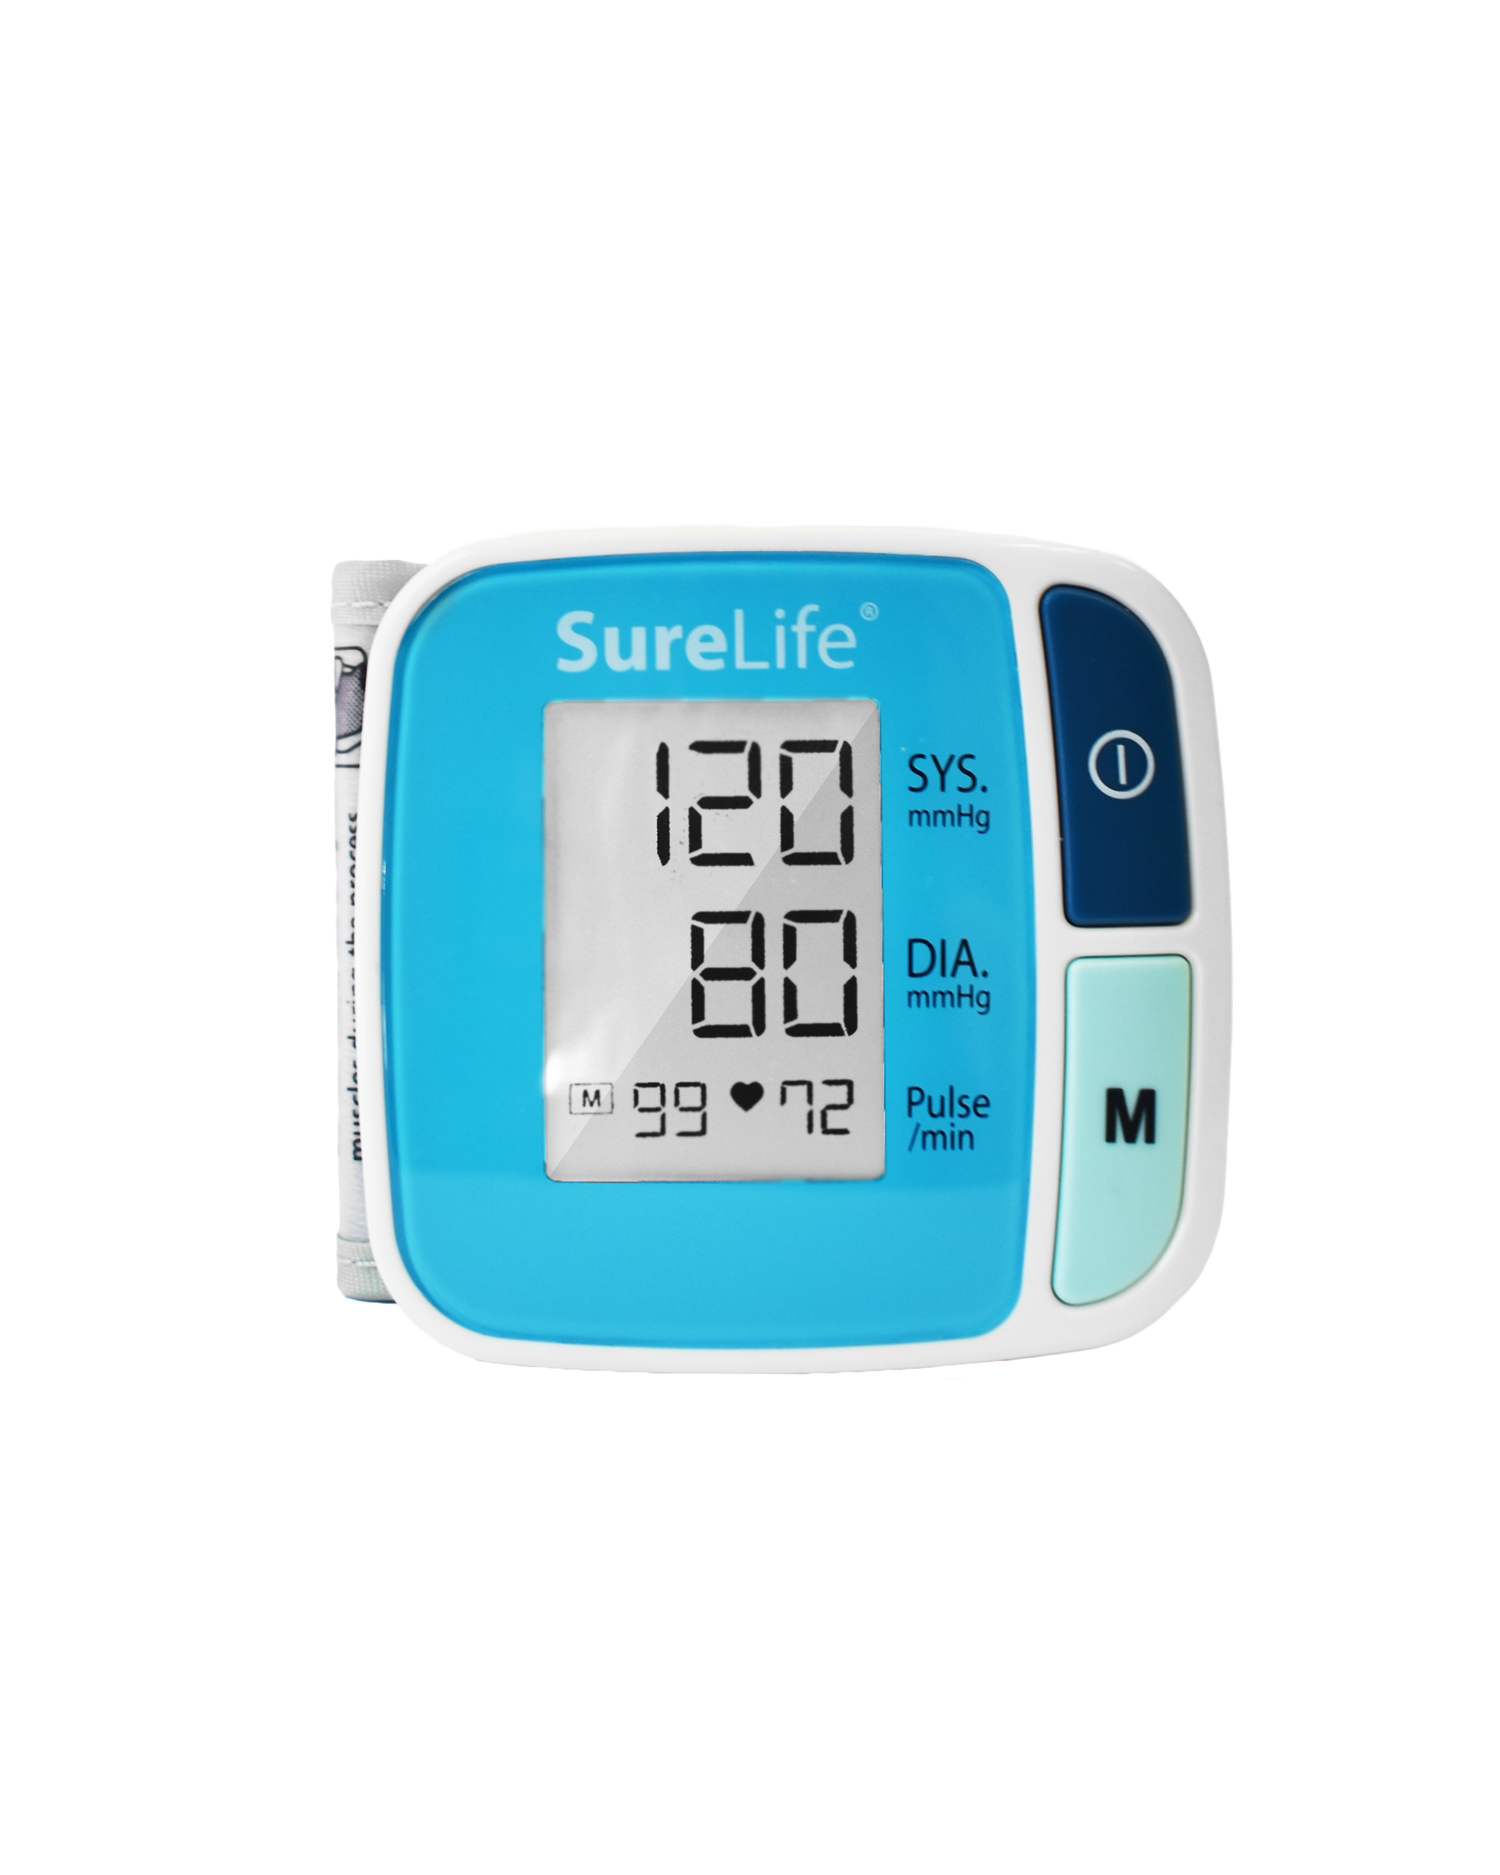 Premium Automatic Wrist Talking Digital Blood Pressure Monitor by